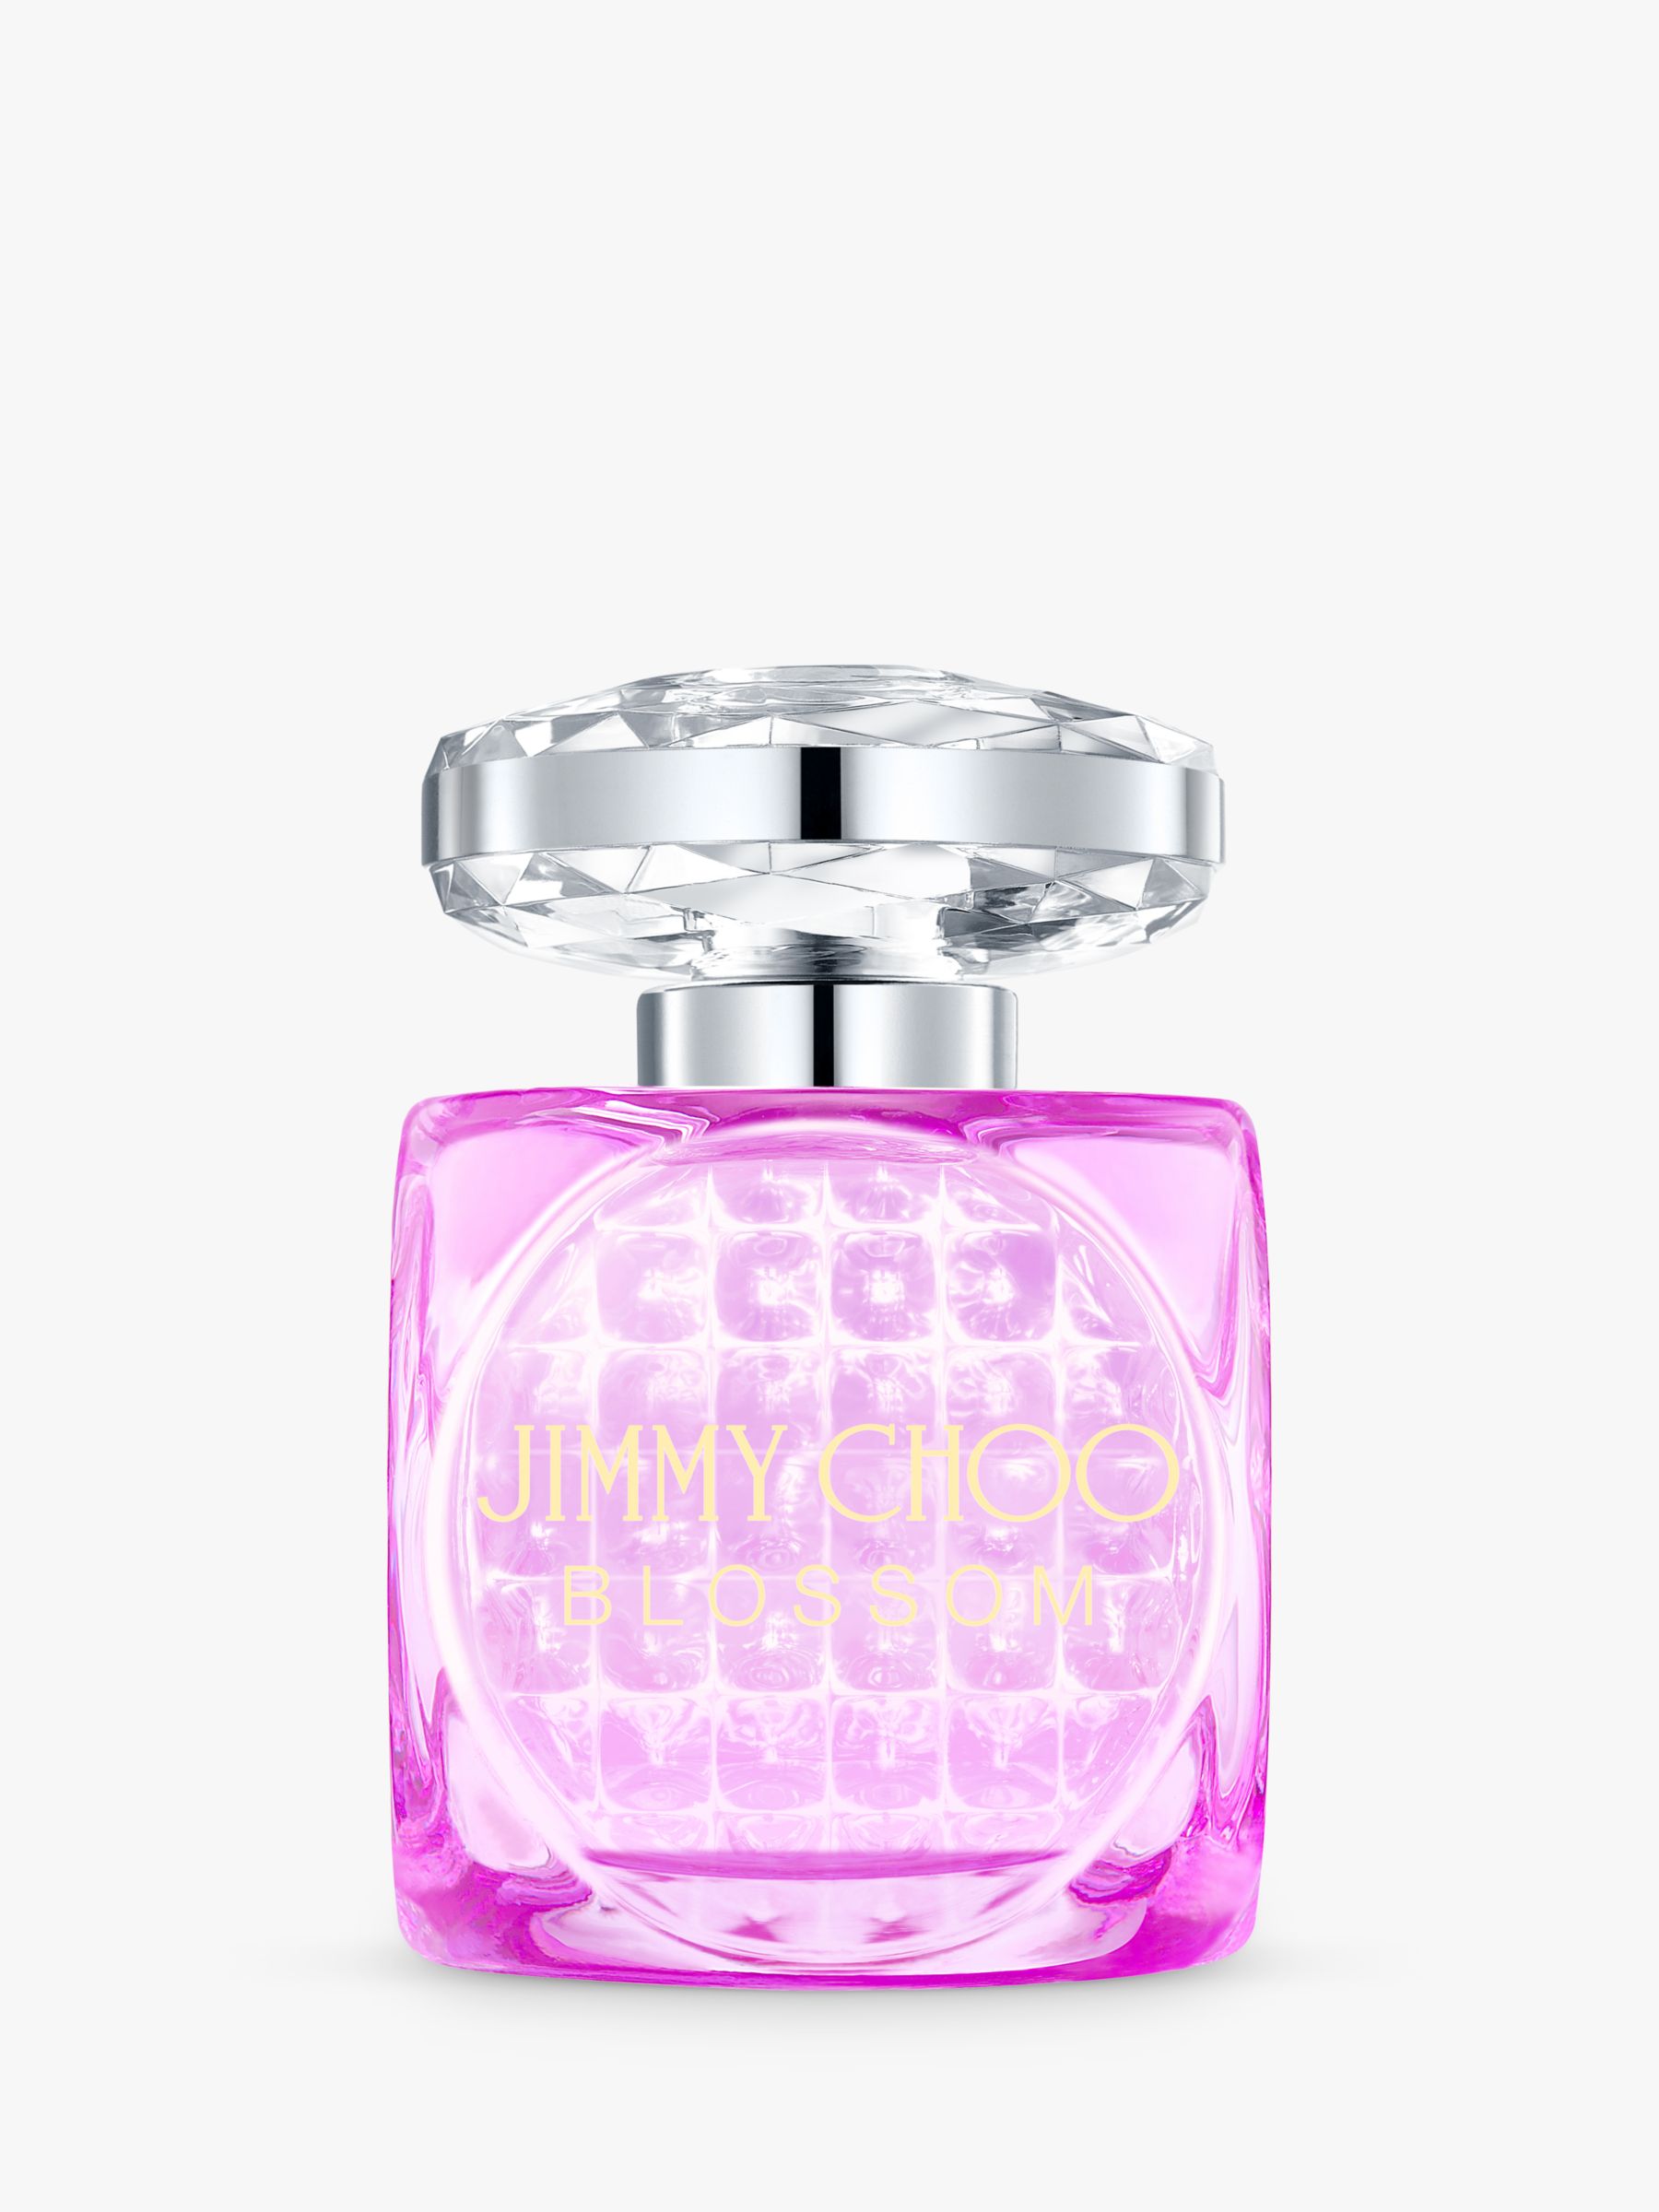 Jimmy Choo Blossom Special Edition Eau de Parfum, 60ml 1